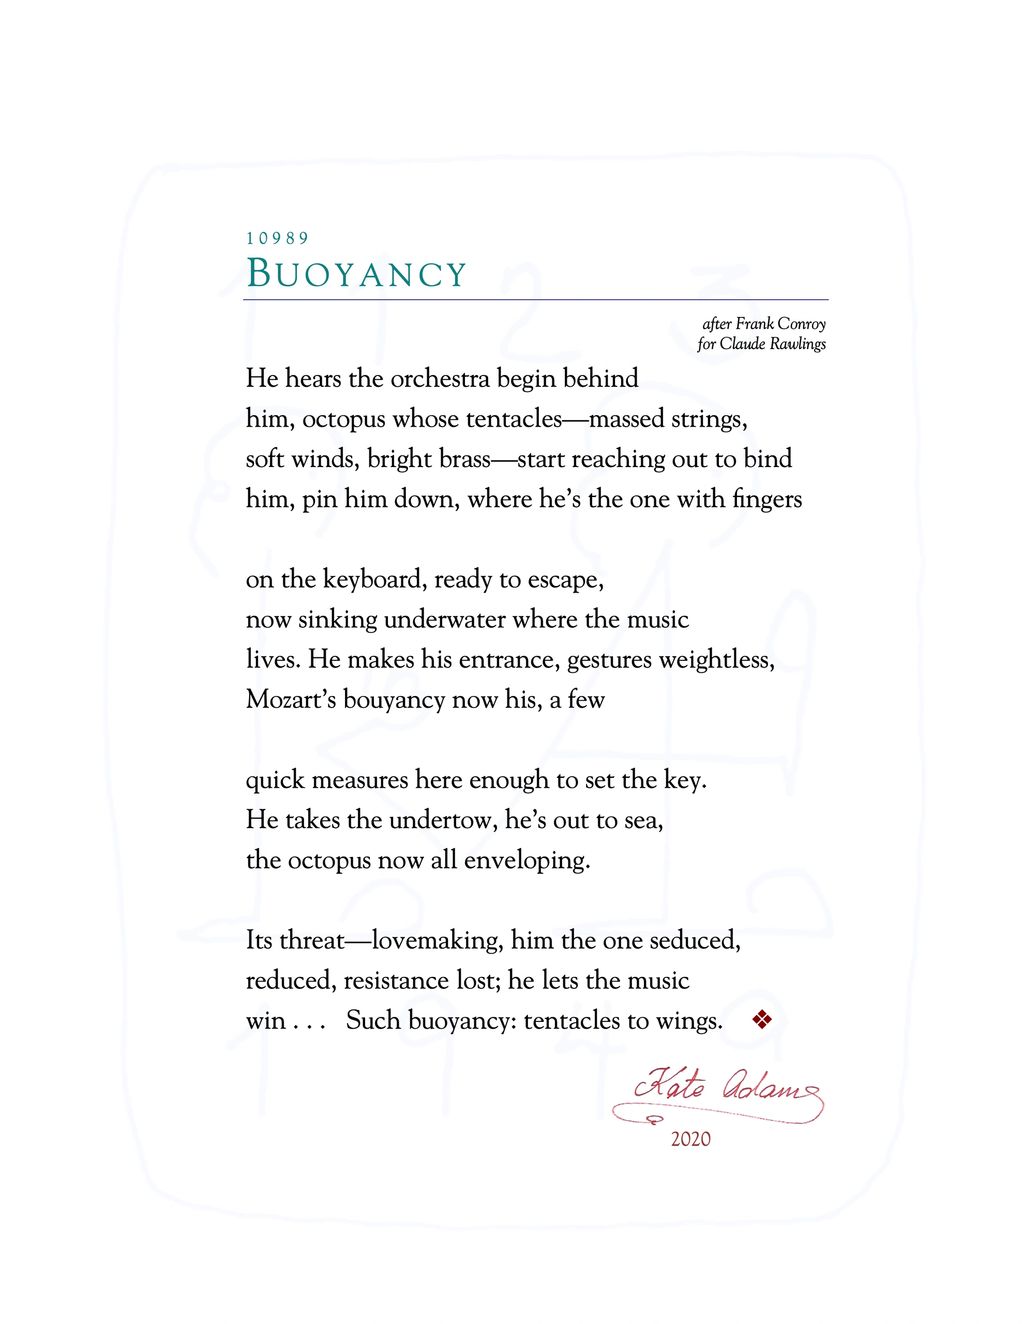 PDF of poem "Buoyancy"
Octopus, lovemaking, orchestra